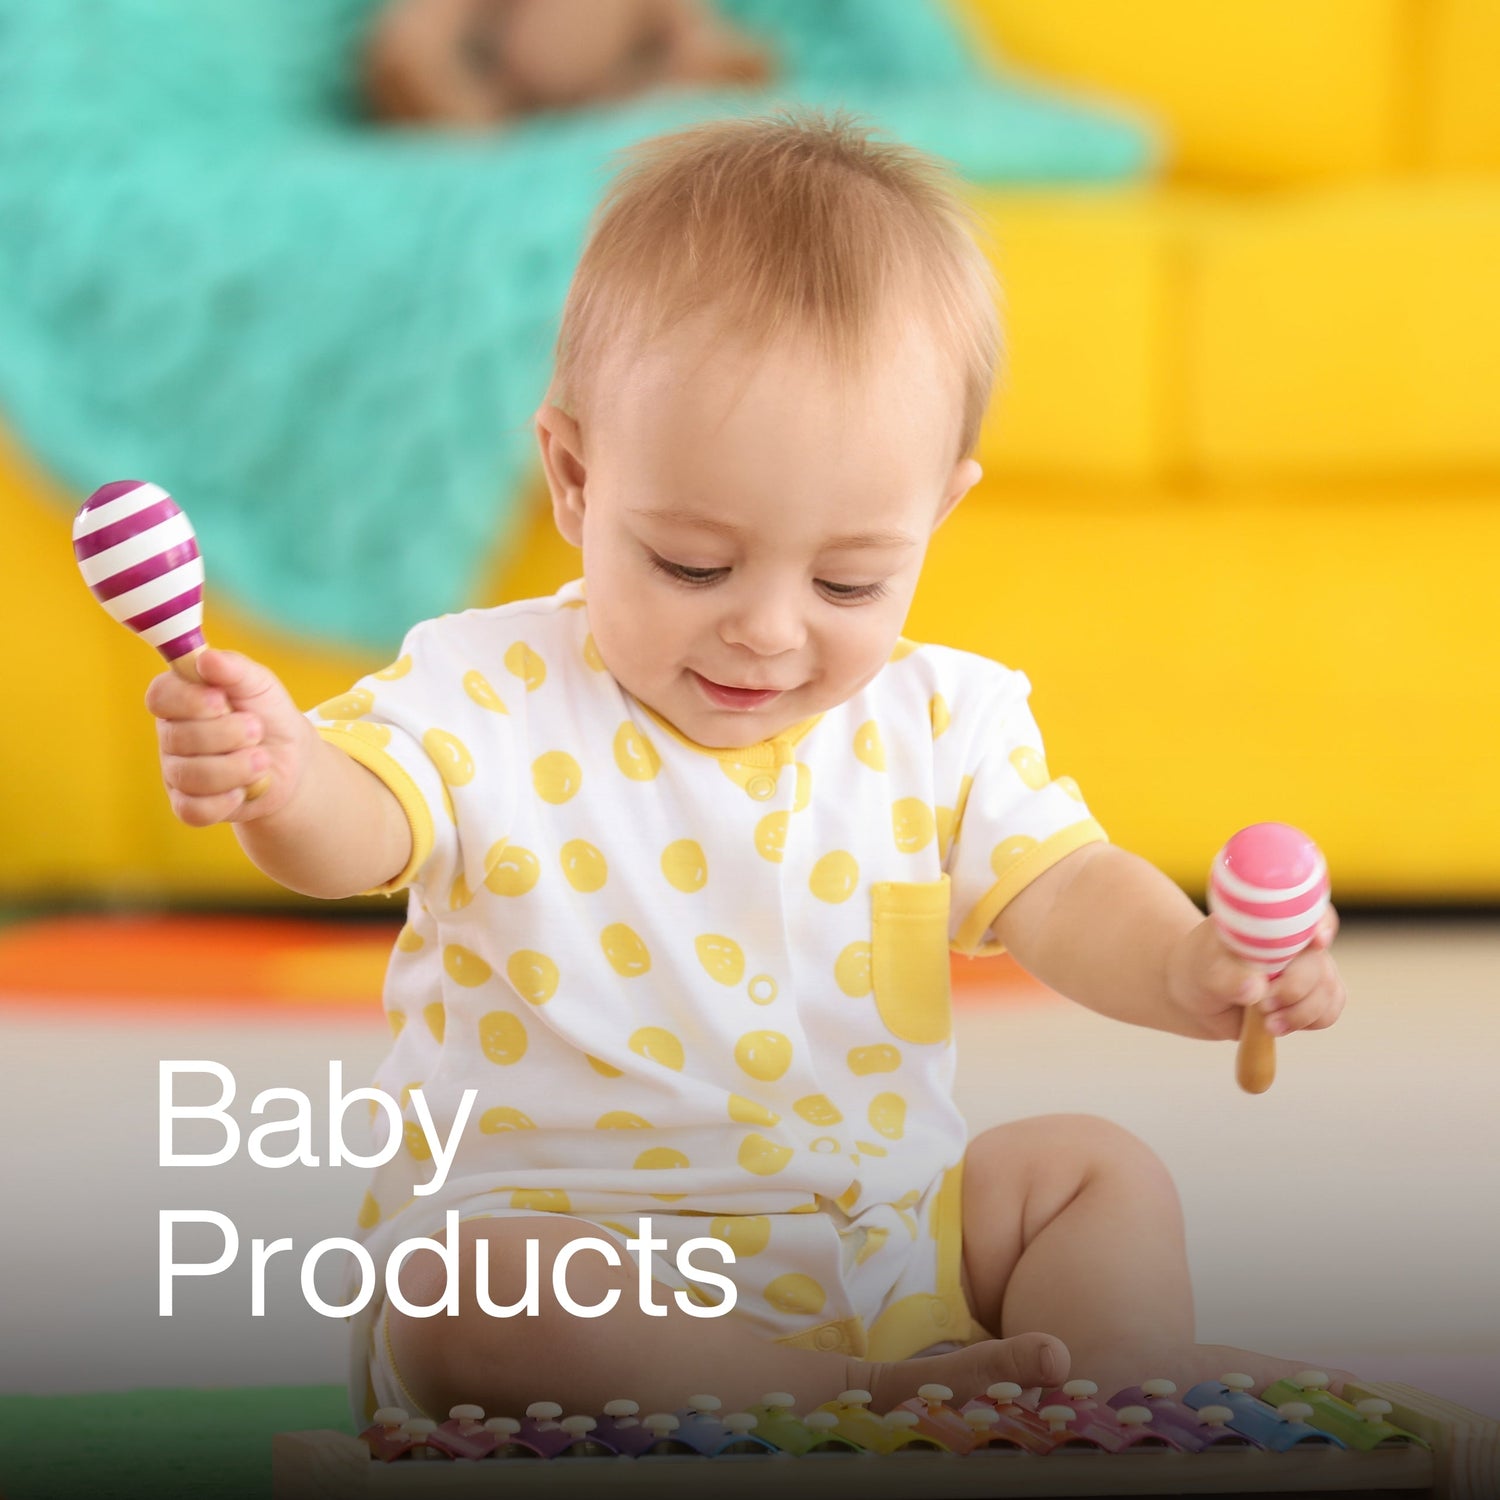 Hocc Baby product, playpen, baby monitor, baby shop dubai uae toy